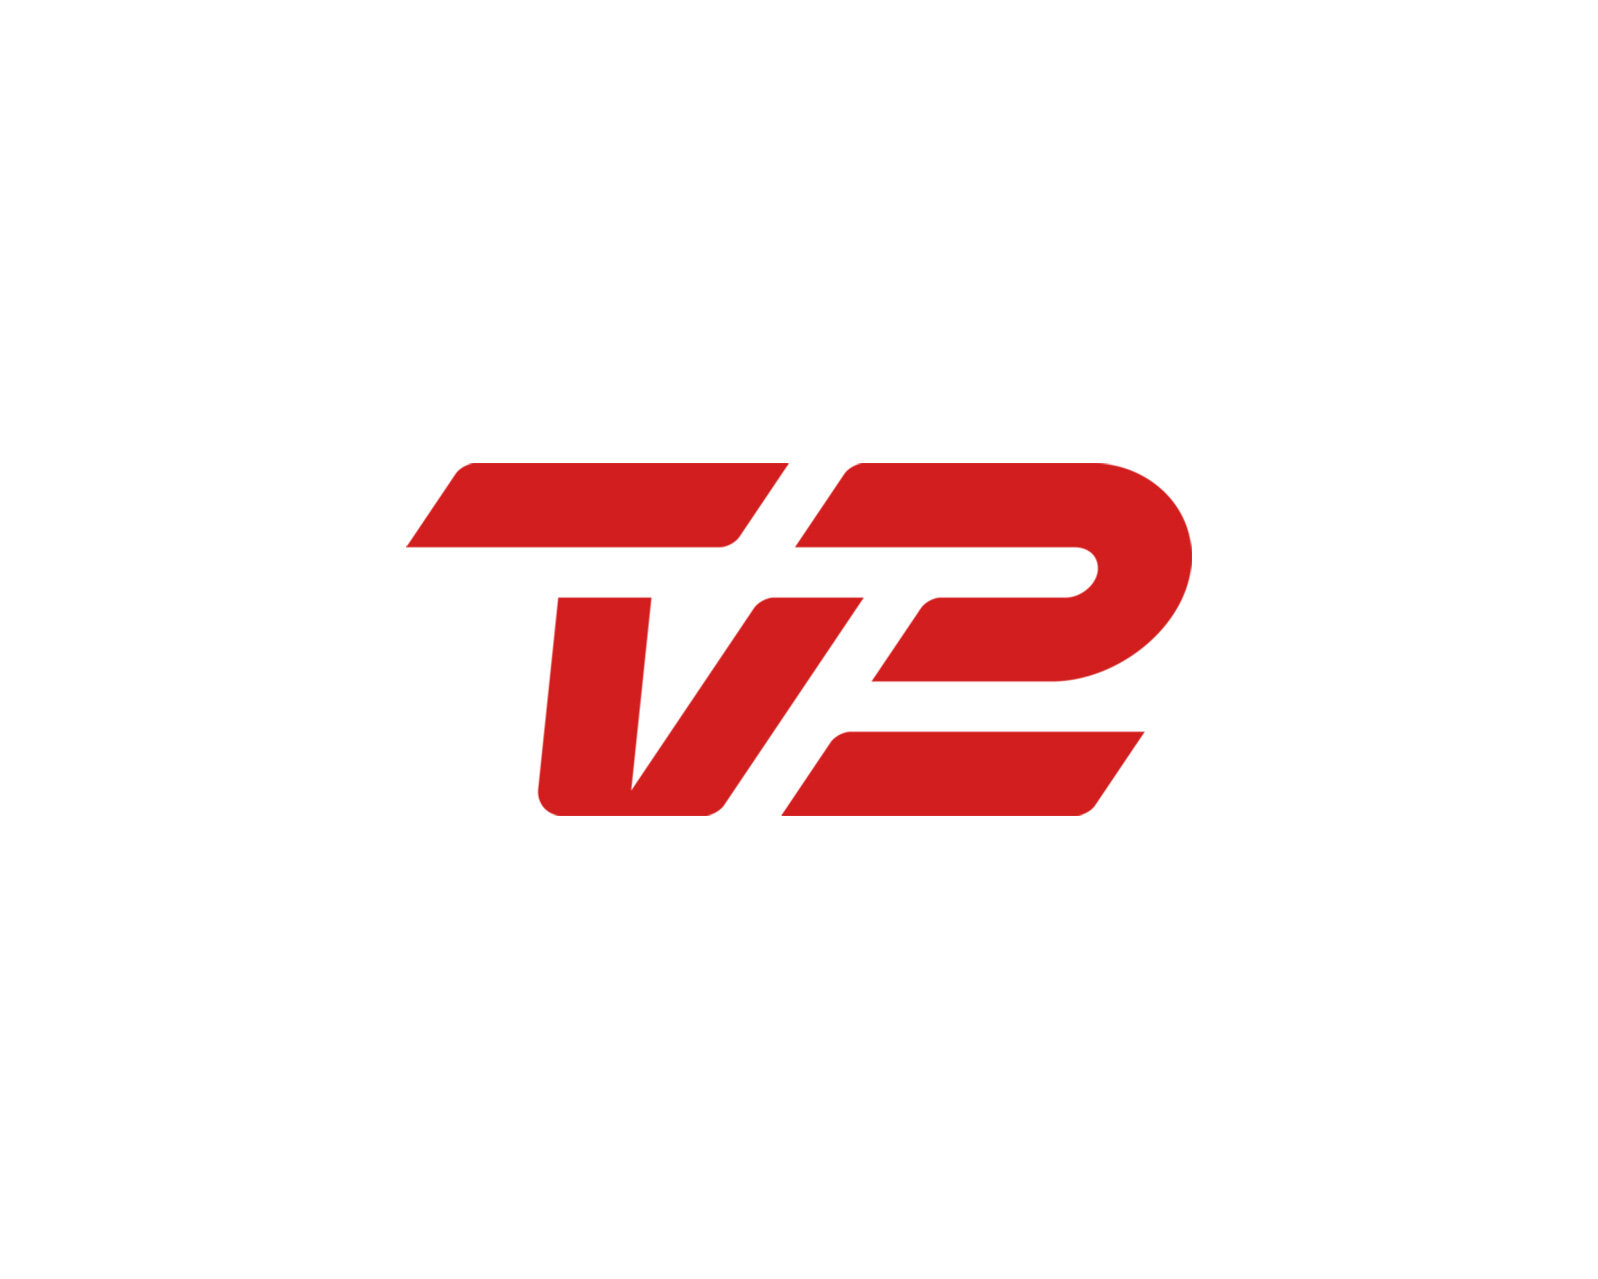 Danish_TV_2_logo.jpg